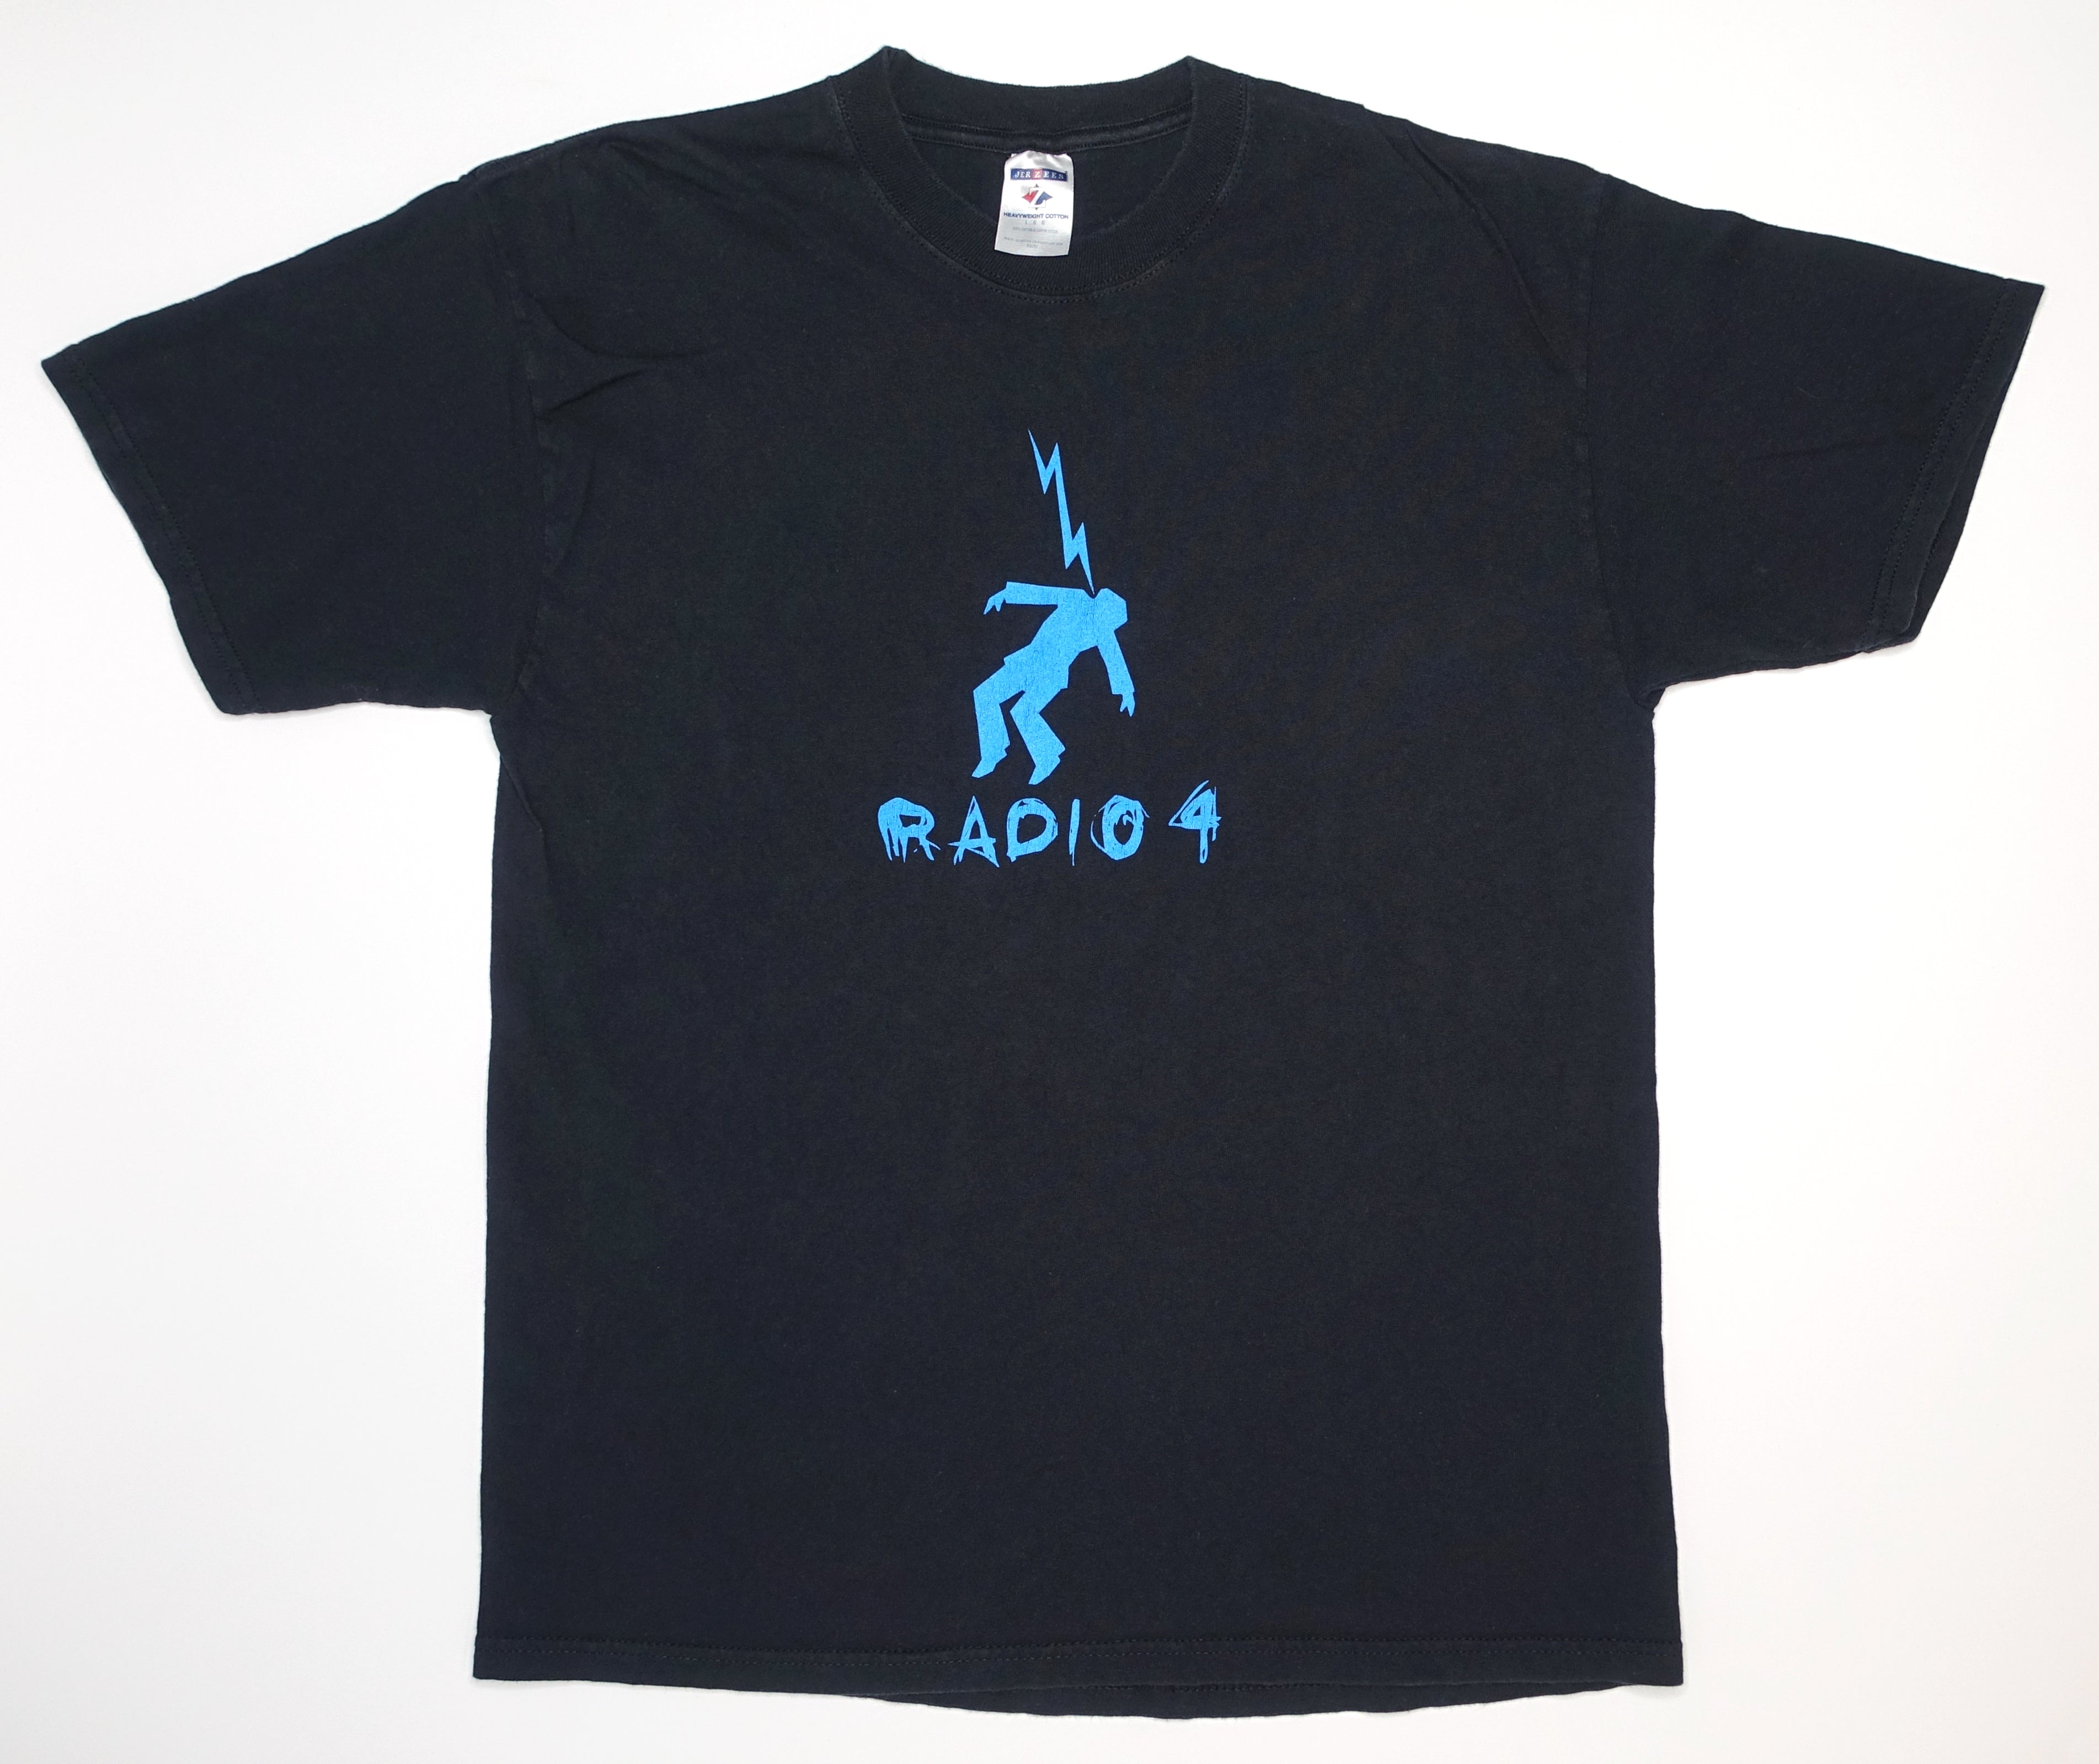 Radio 4 - Electrify 2003 Tour Shirt Size Large